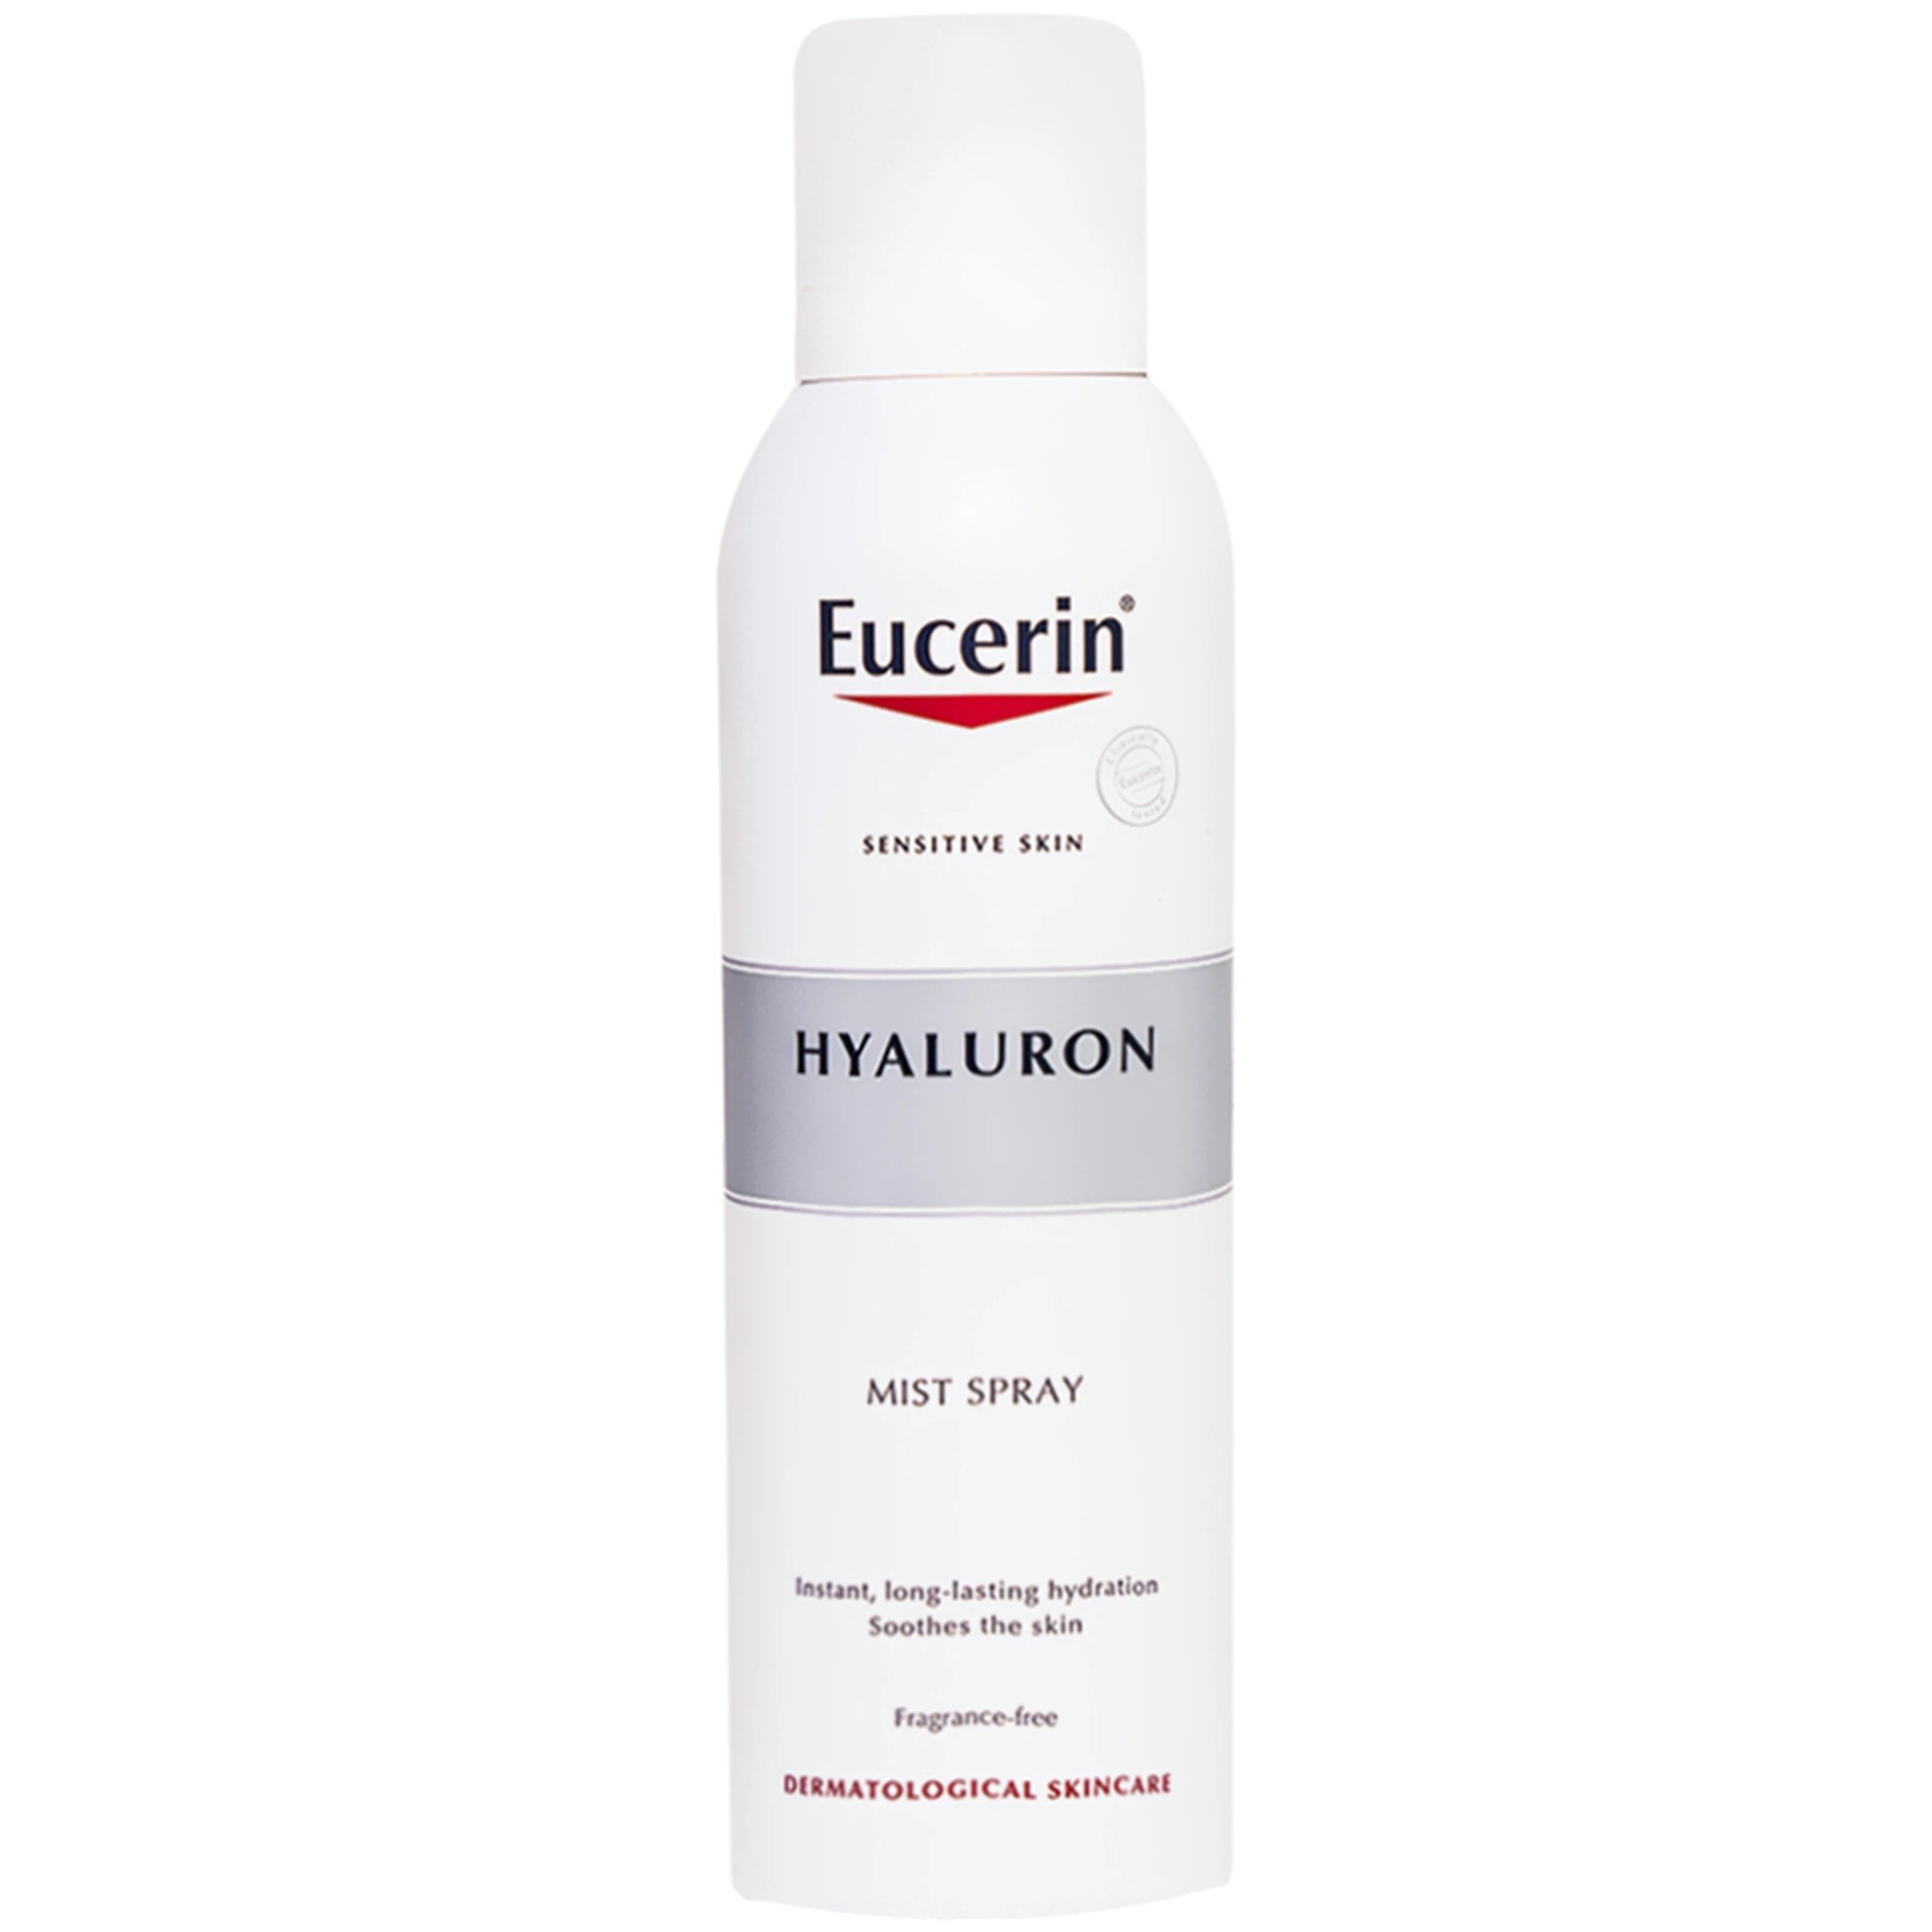 Xịt dưỡng ẩm Eucerin Hyaluron Mist Spray cho da nhạy cảm (150ml)